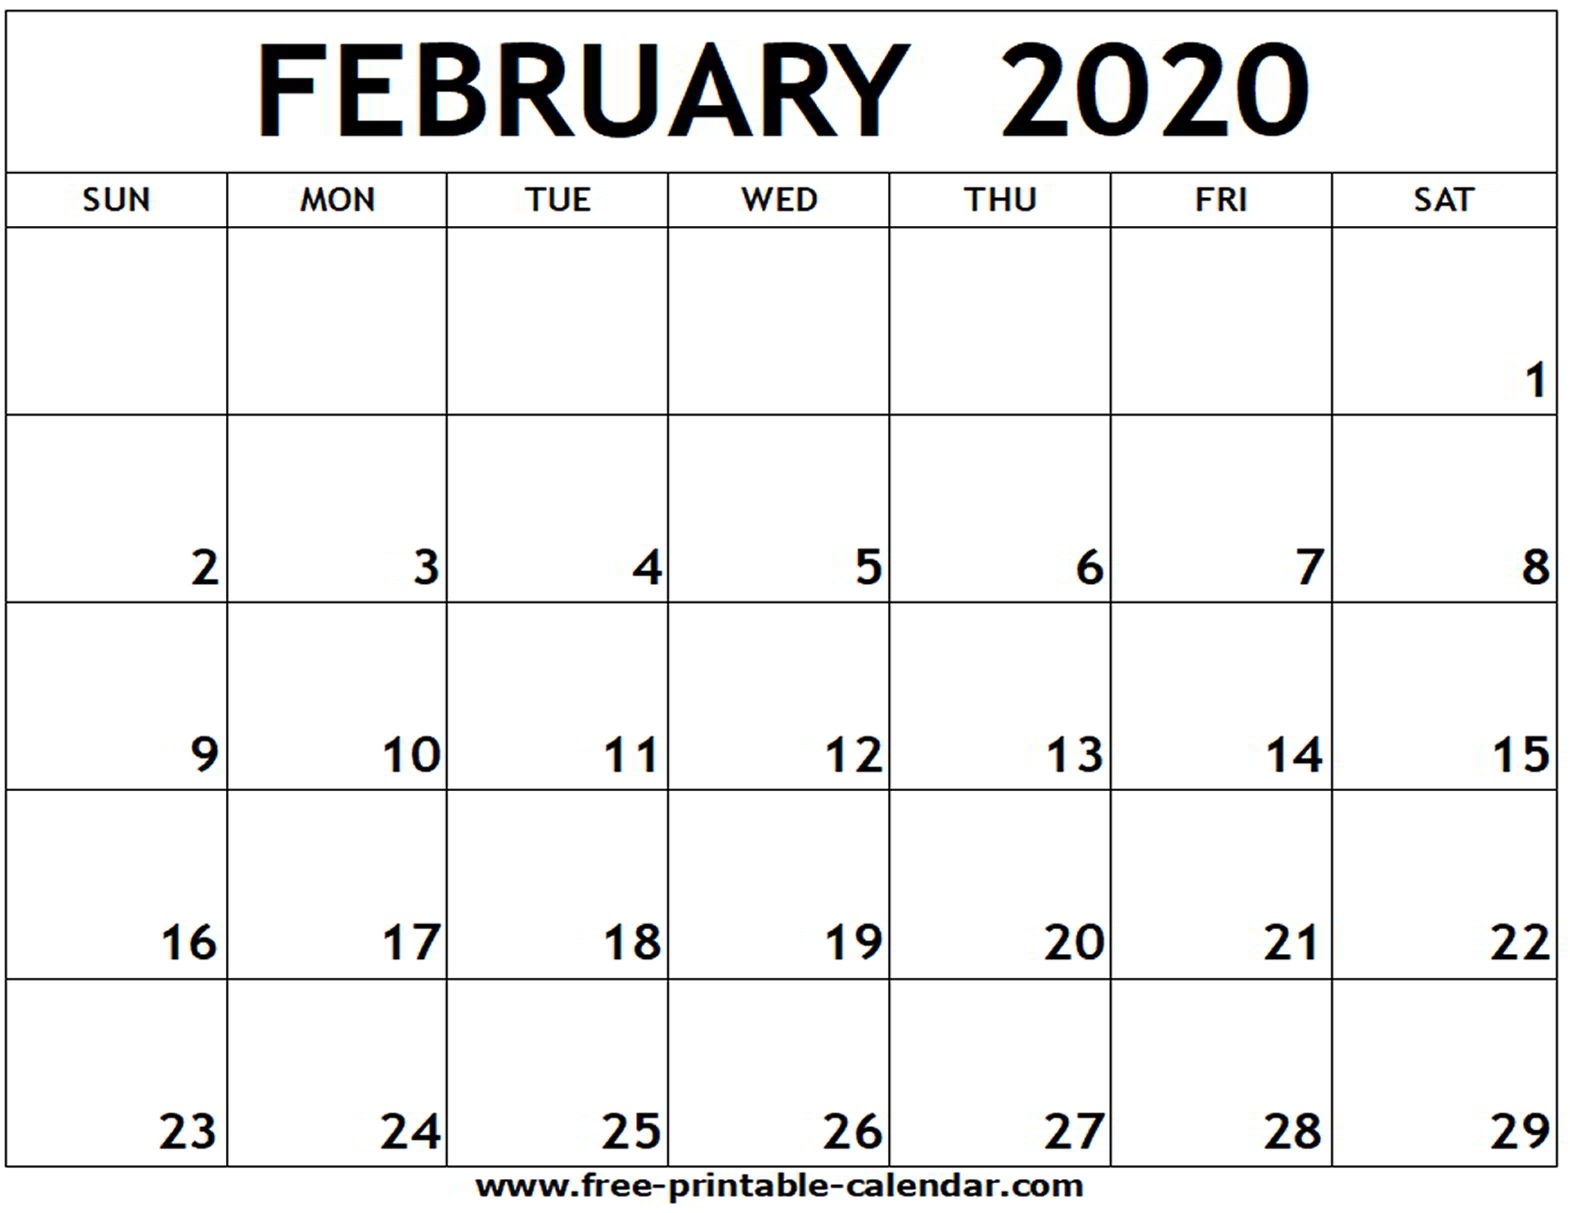 February 2020 Printable Calendar - Free-Printable-Calendar  February 2020 Calendar